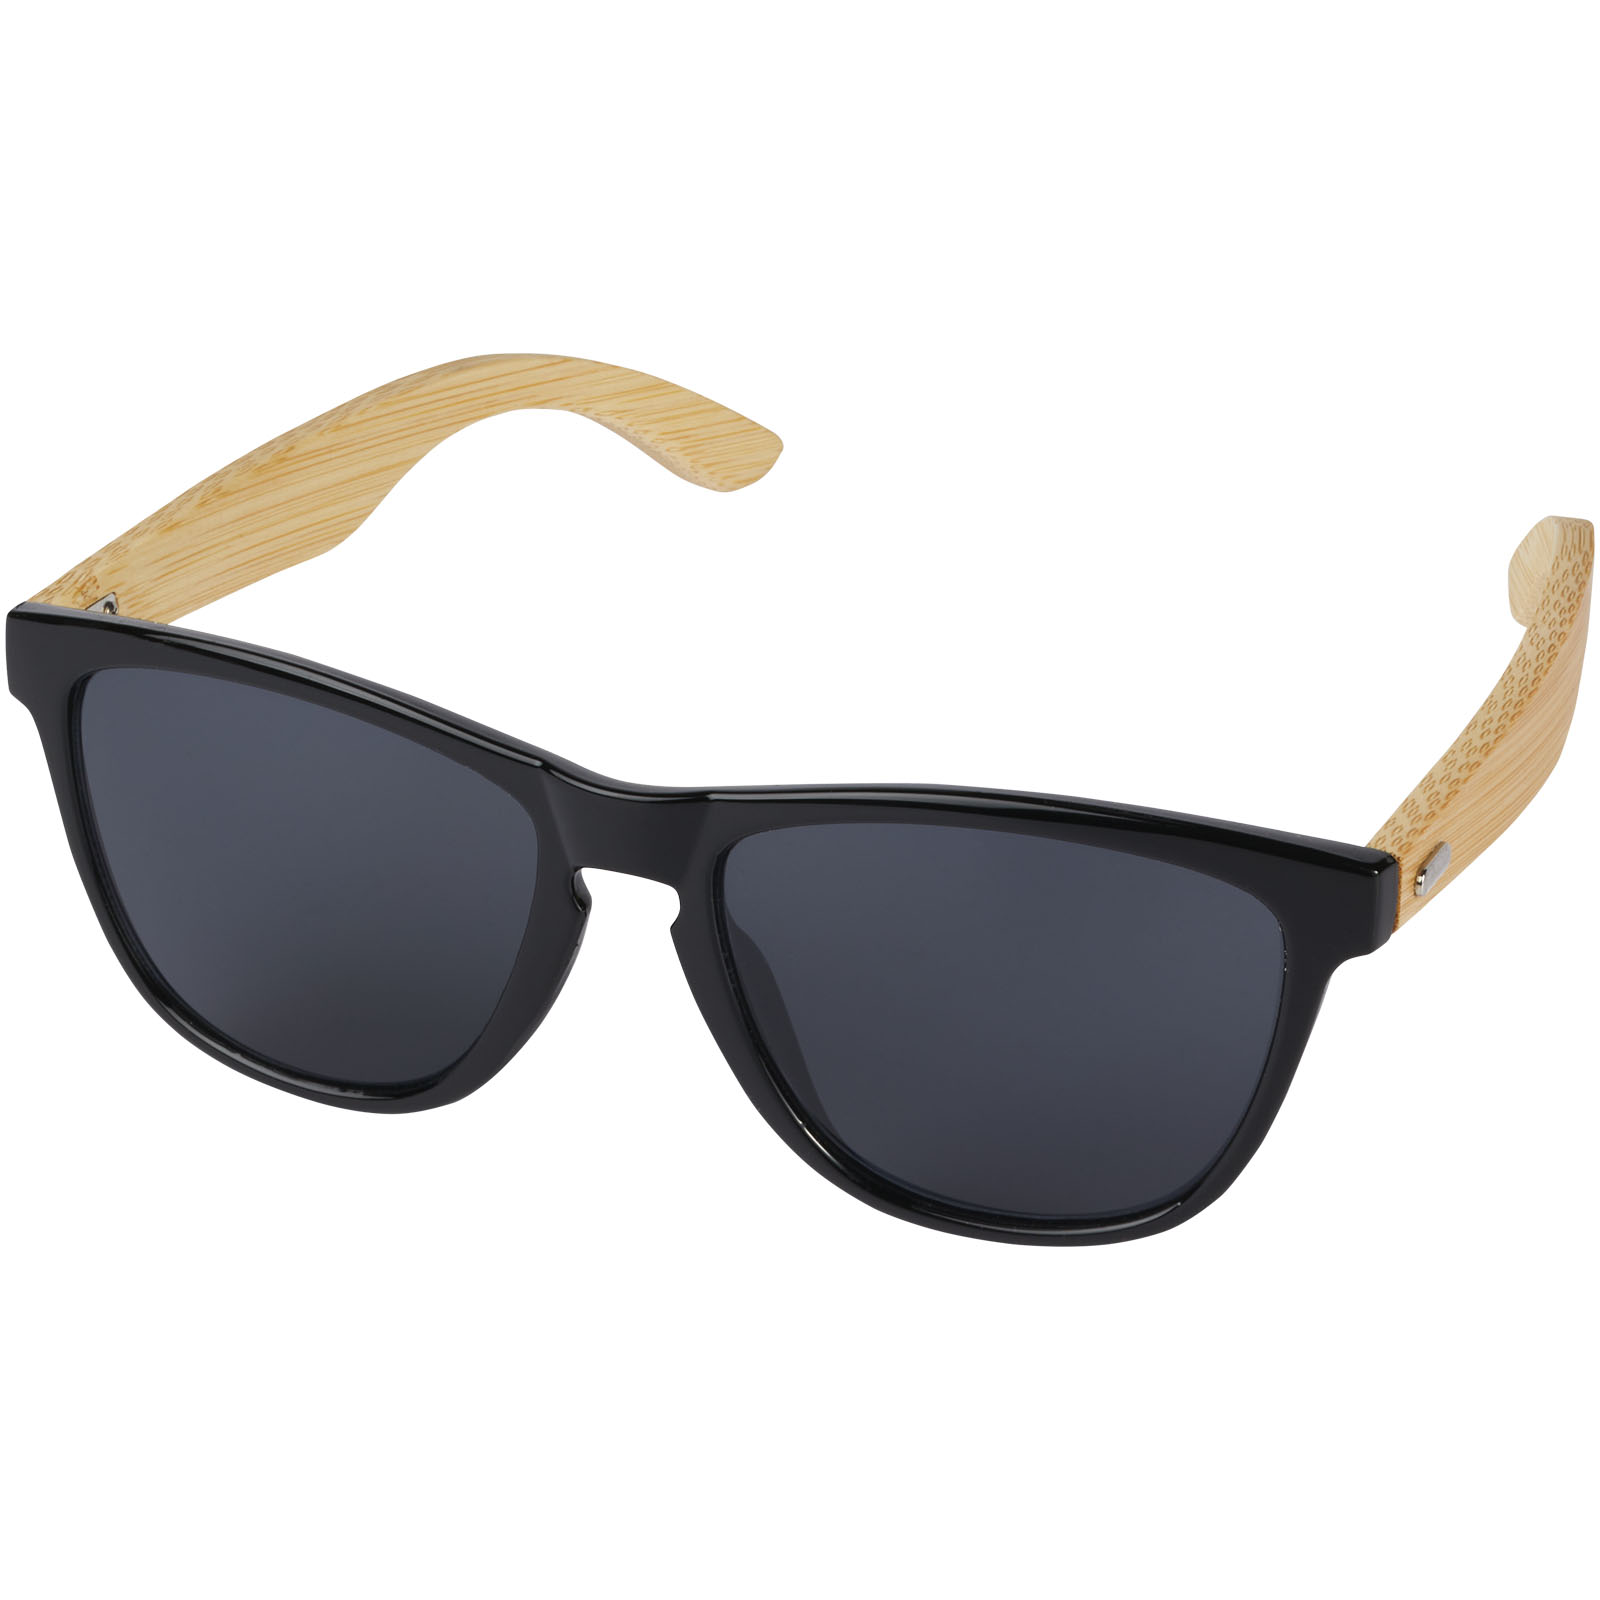 Advertising Sunglasses - Sun Ray ocean bound plastic and bamboo sunglasses